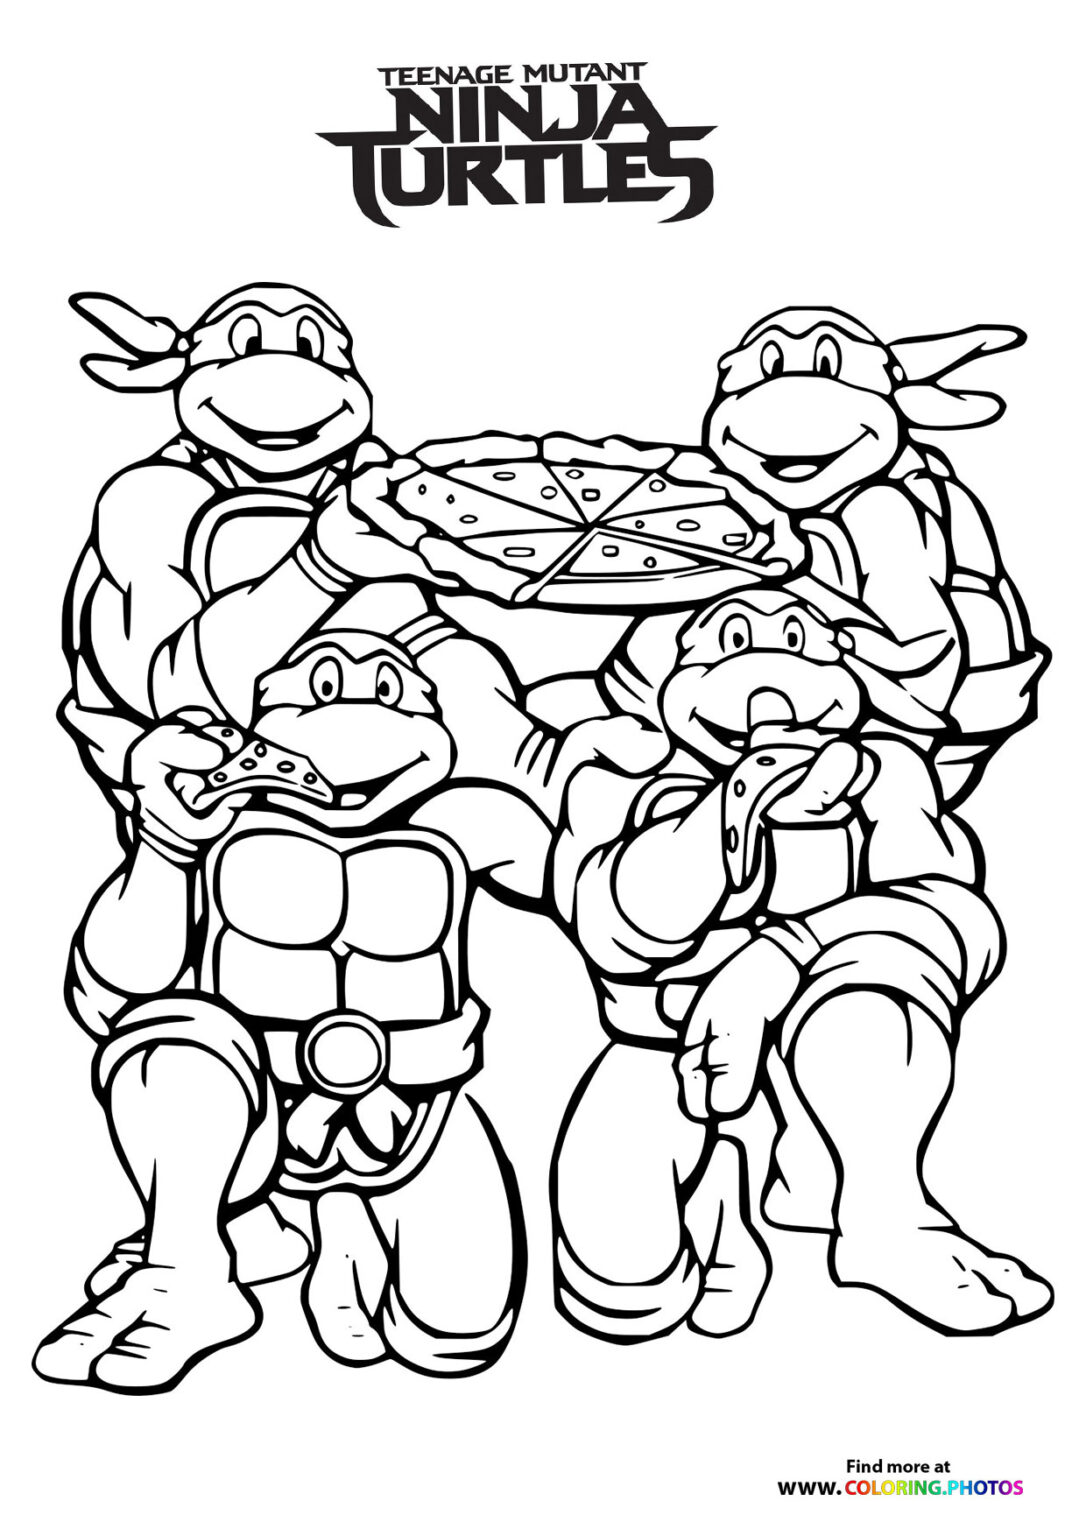 Teenage Mutant Ninja Turtles Coloring Pages for kids 100 free print